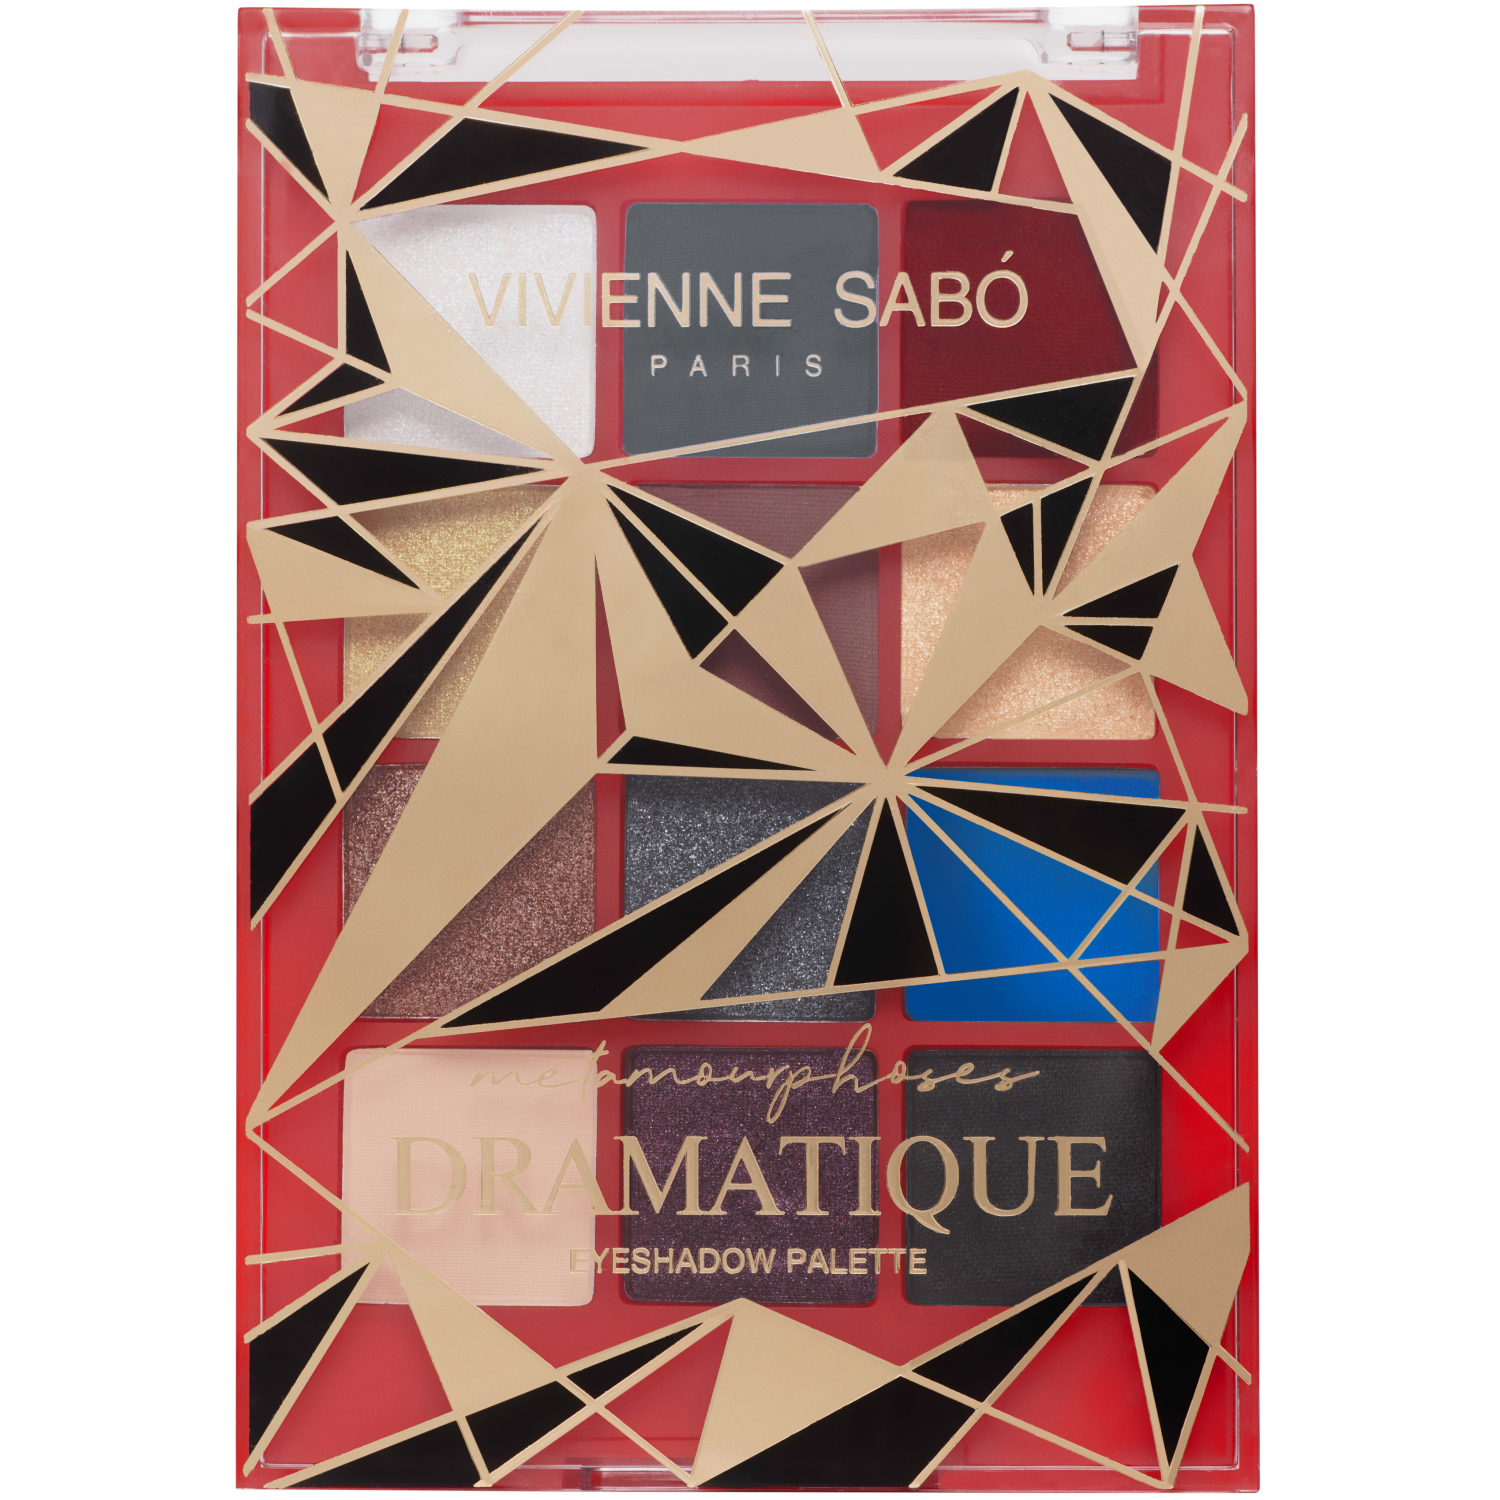 Палетка теней Vivienne Sabo Metamourphoses Dramatique 03 палетка теней для век vivienne sabo fleurs naturelles тон 04